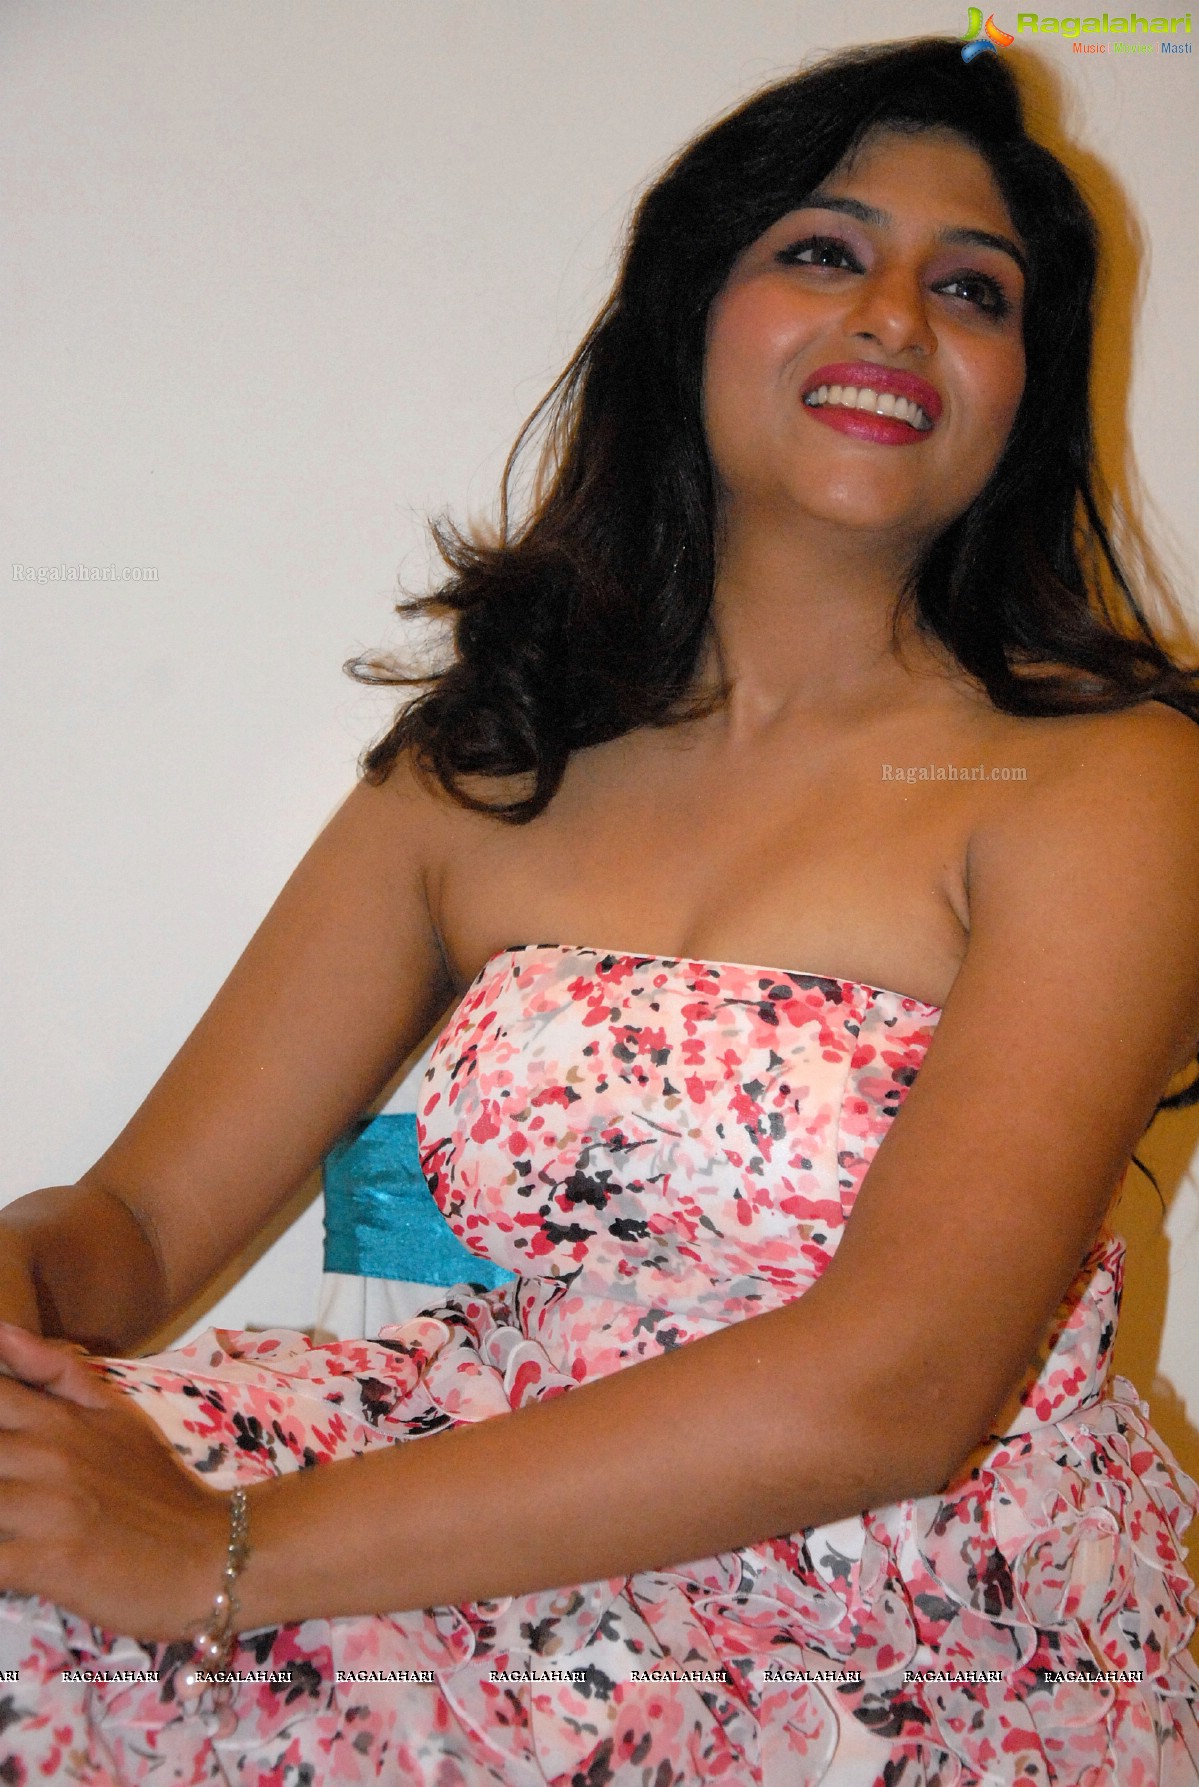 Lakshmi Nair